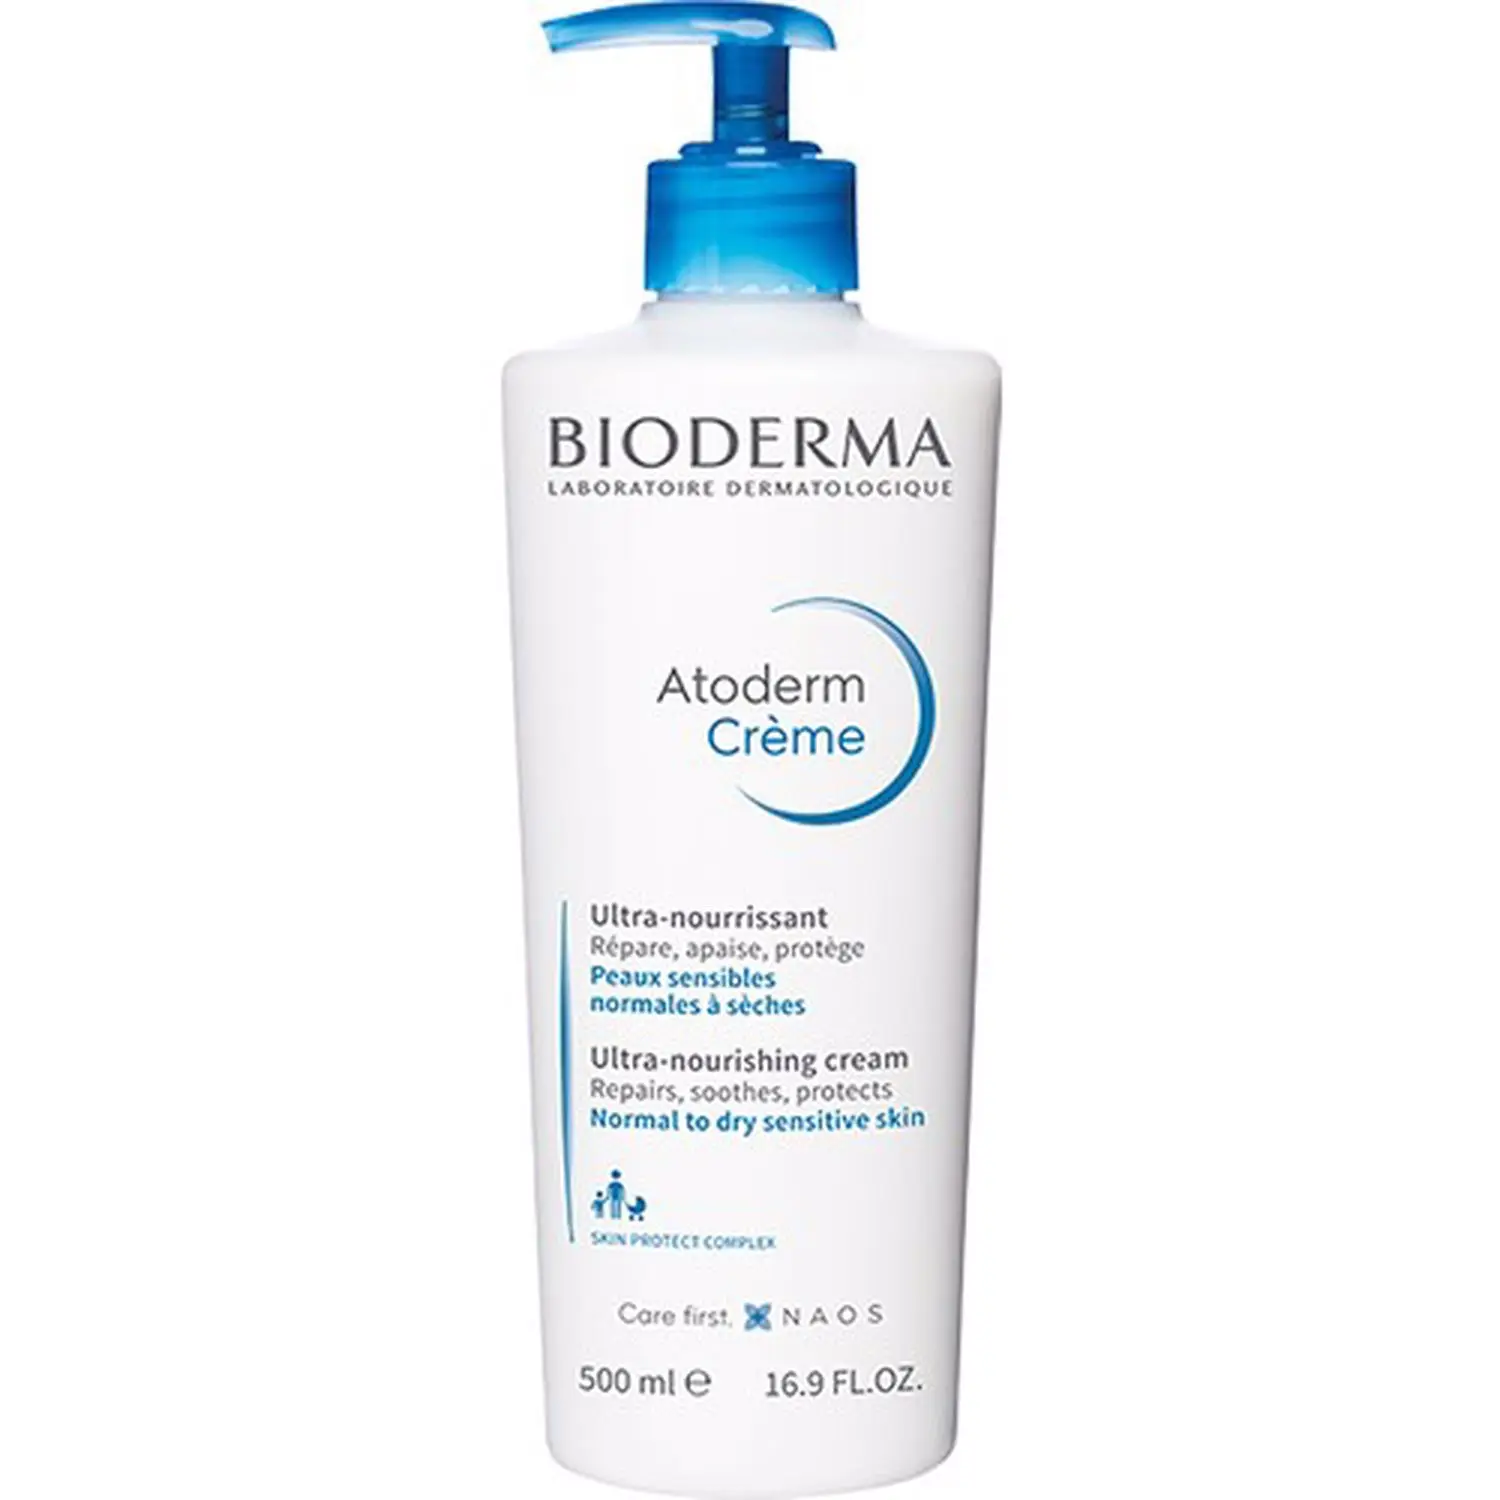 Bioderma Atoderm Cream 500 ml Dry skin moisturizing, nourishing and protecting care Cream you special care Cream